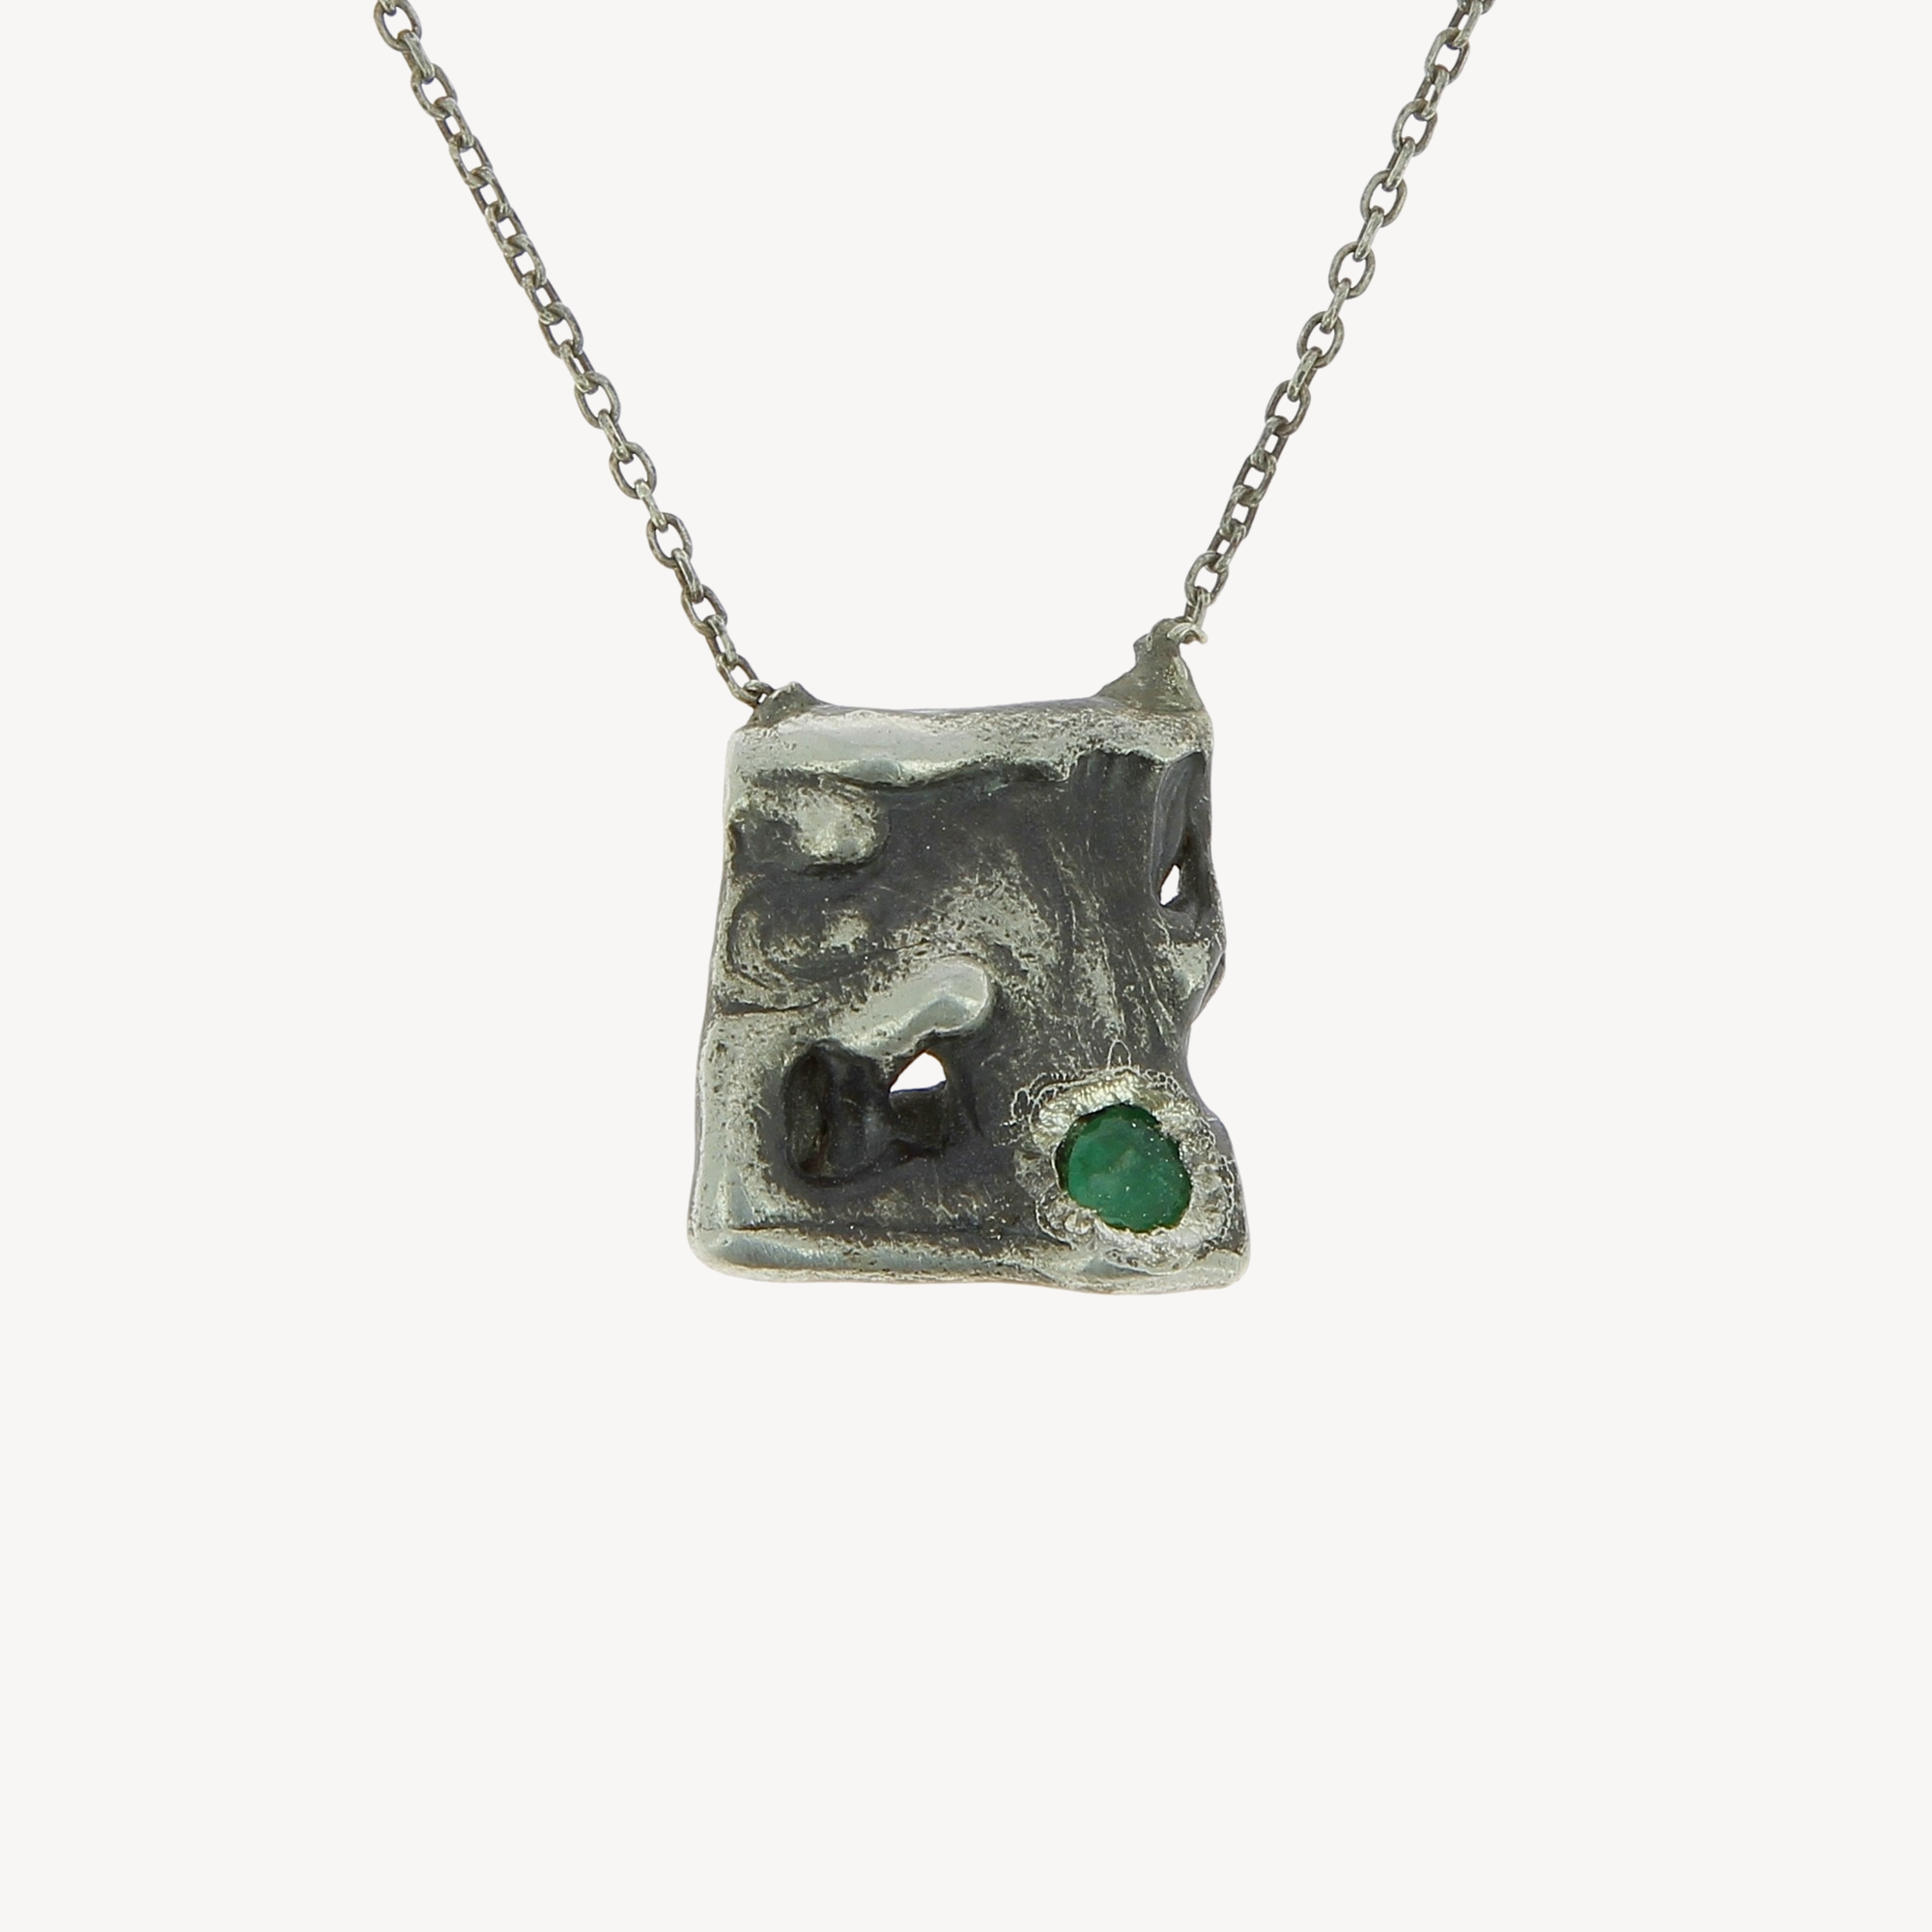 Melt plate necklace 1 emerald